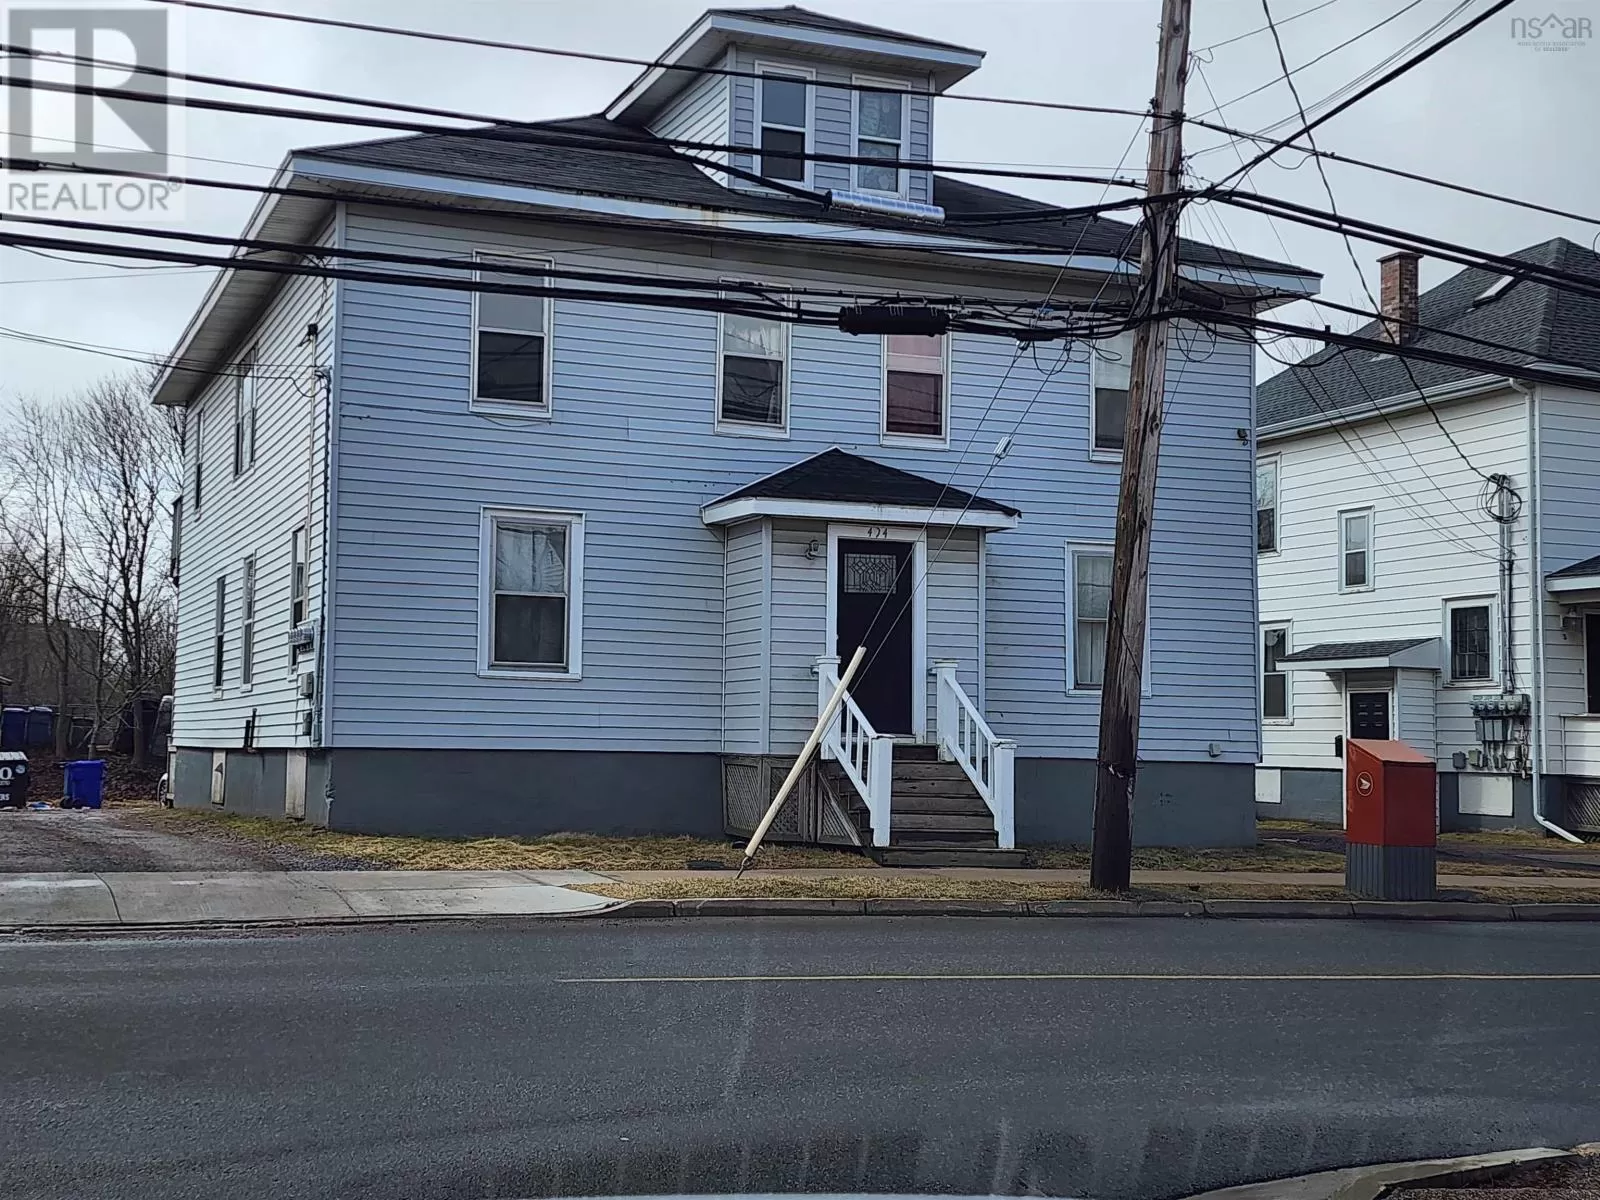 Fourplex for rent: 494 Robie Street, Truro, Nova Scotia B2N 1M3